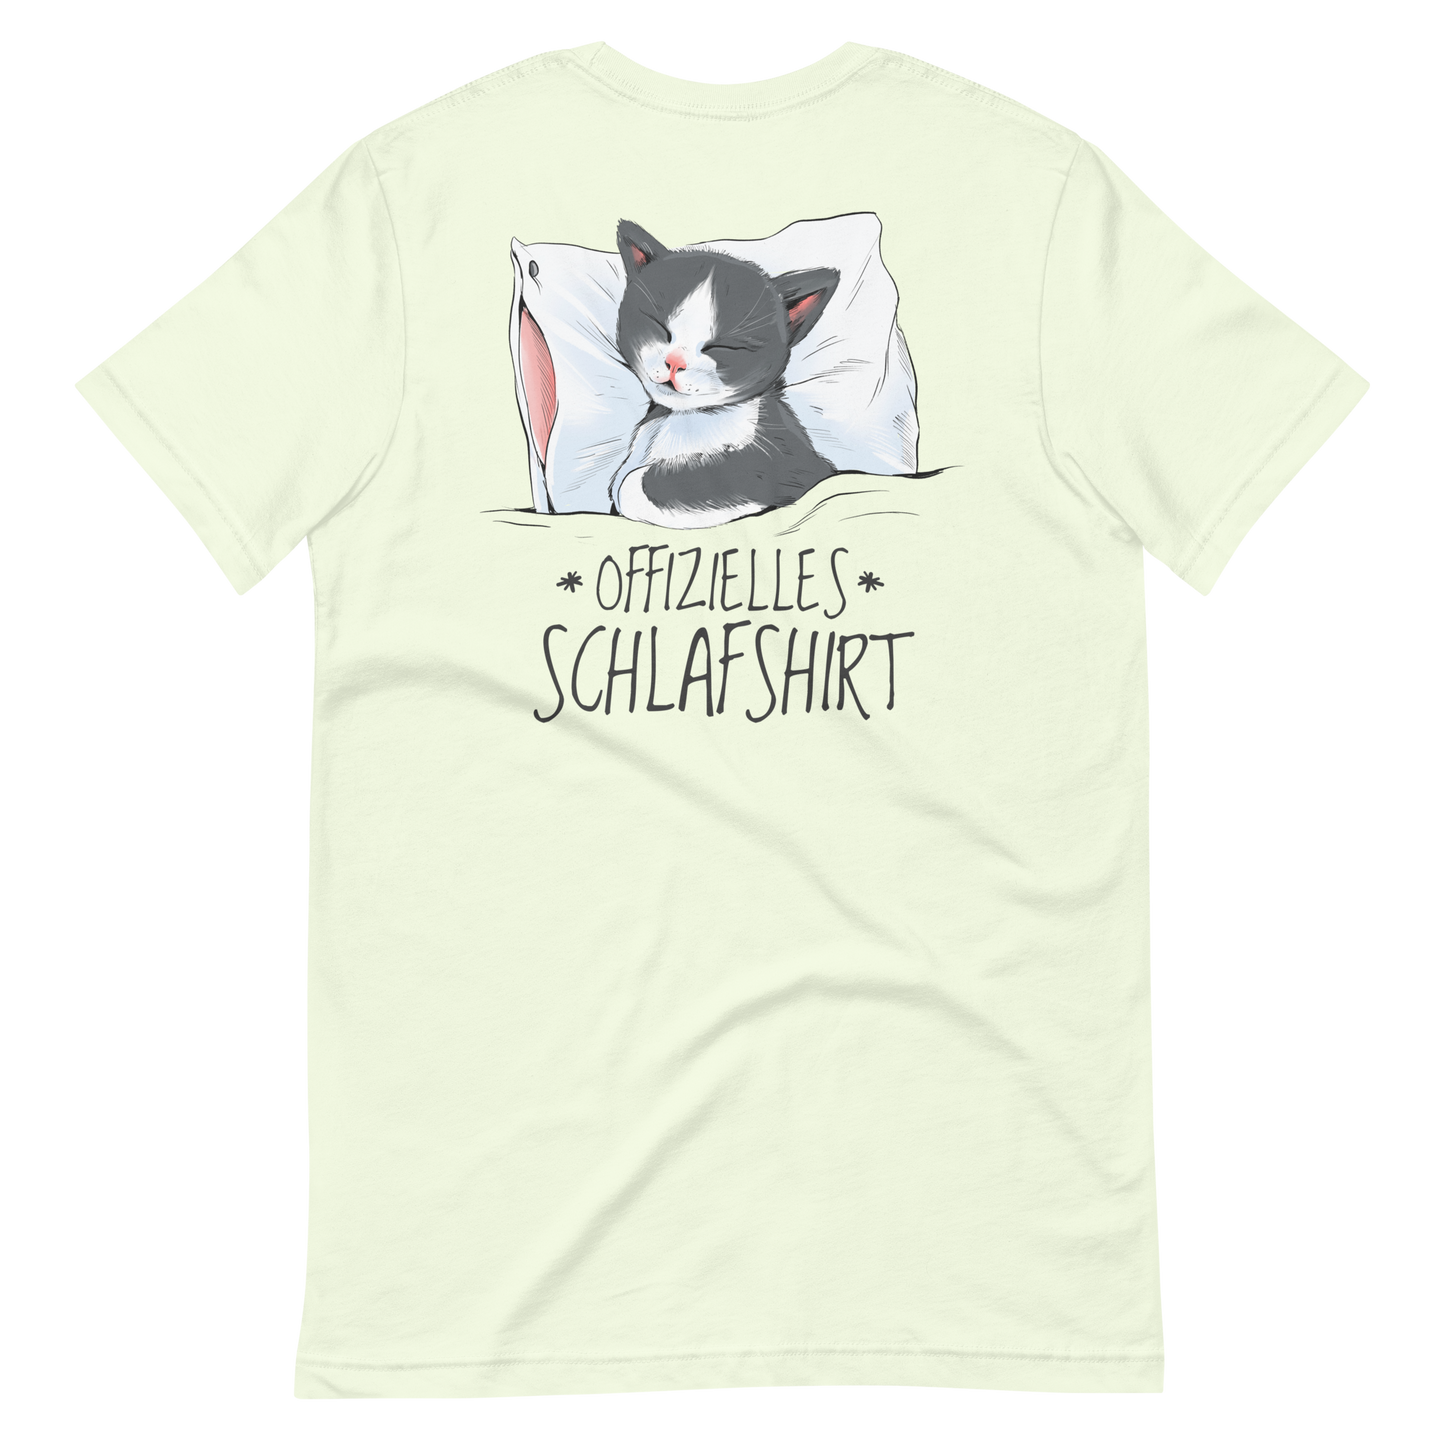 Sleep shirt cat | Unisex t-shirt - F&B